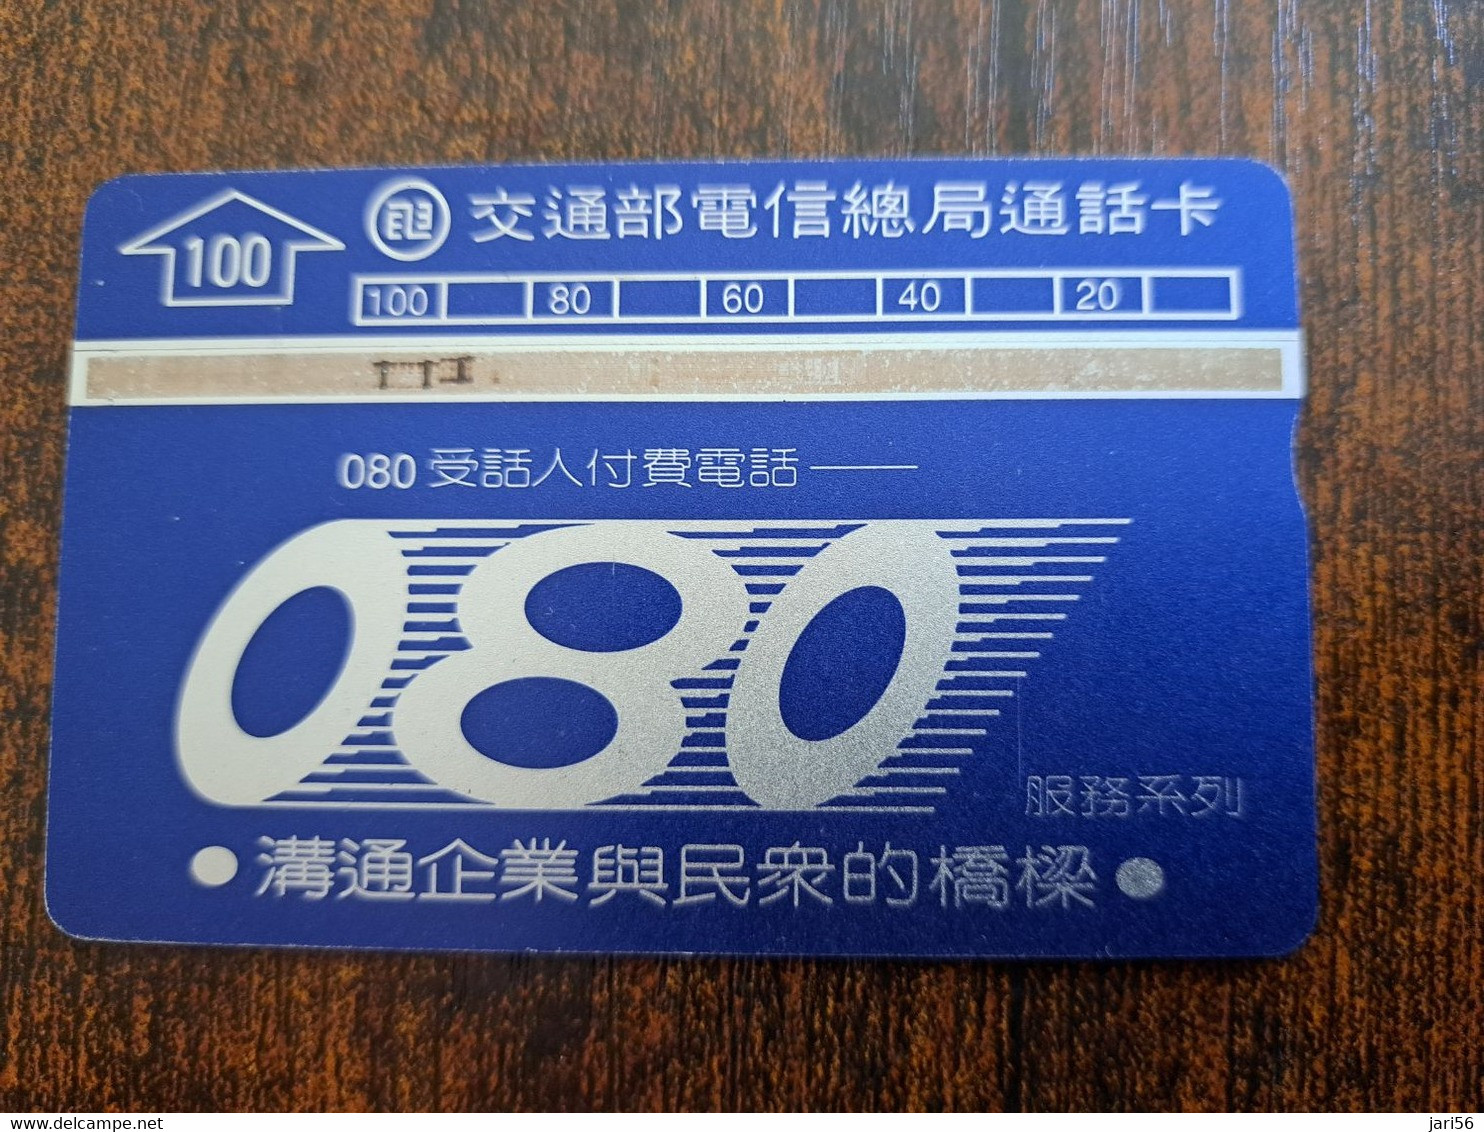 TAIWAN  L&G CARD  100 UNITS / BLUE 080     /  USED    **10154** - Taiwan (Formose)